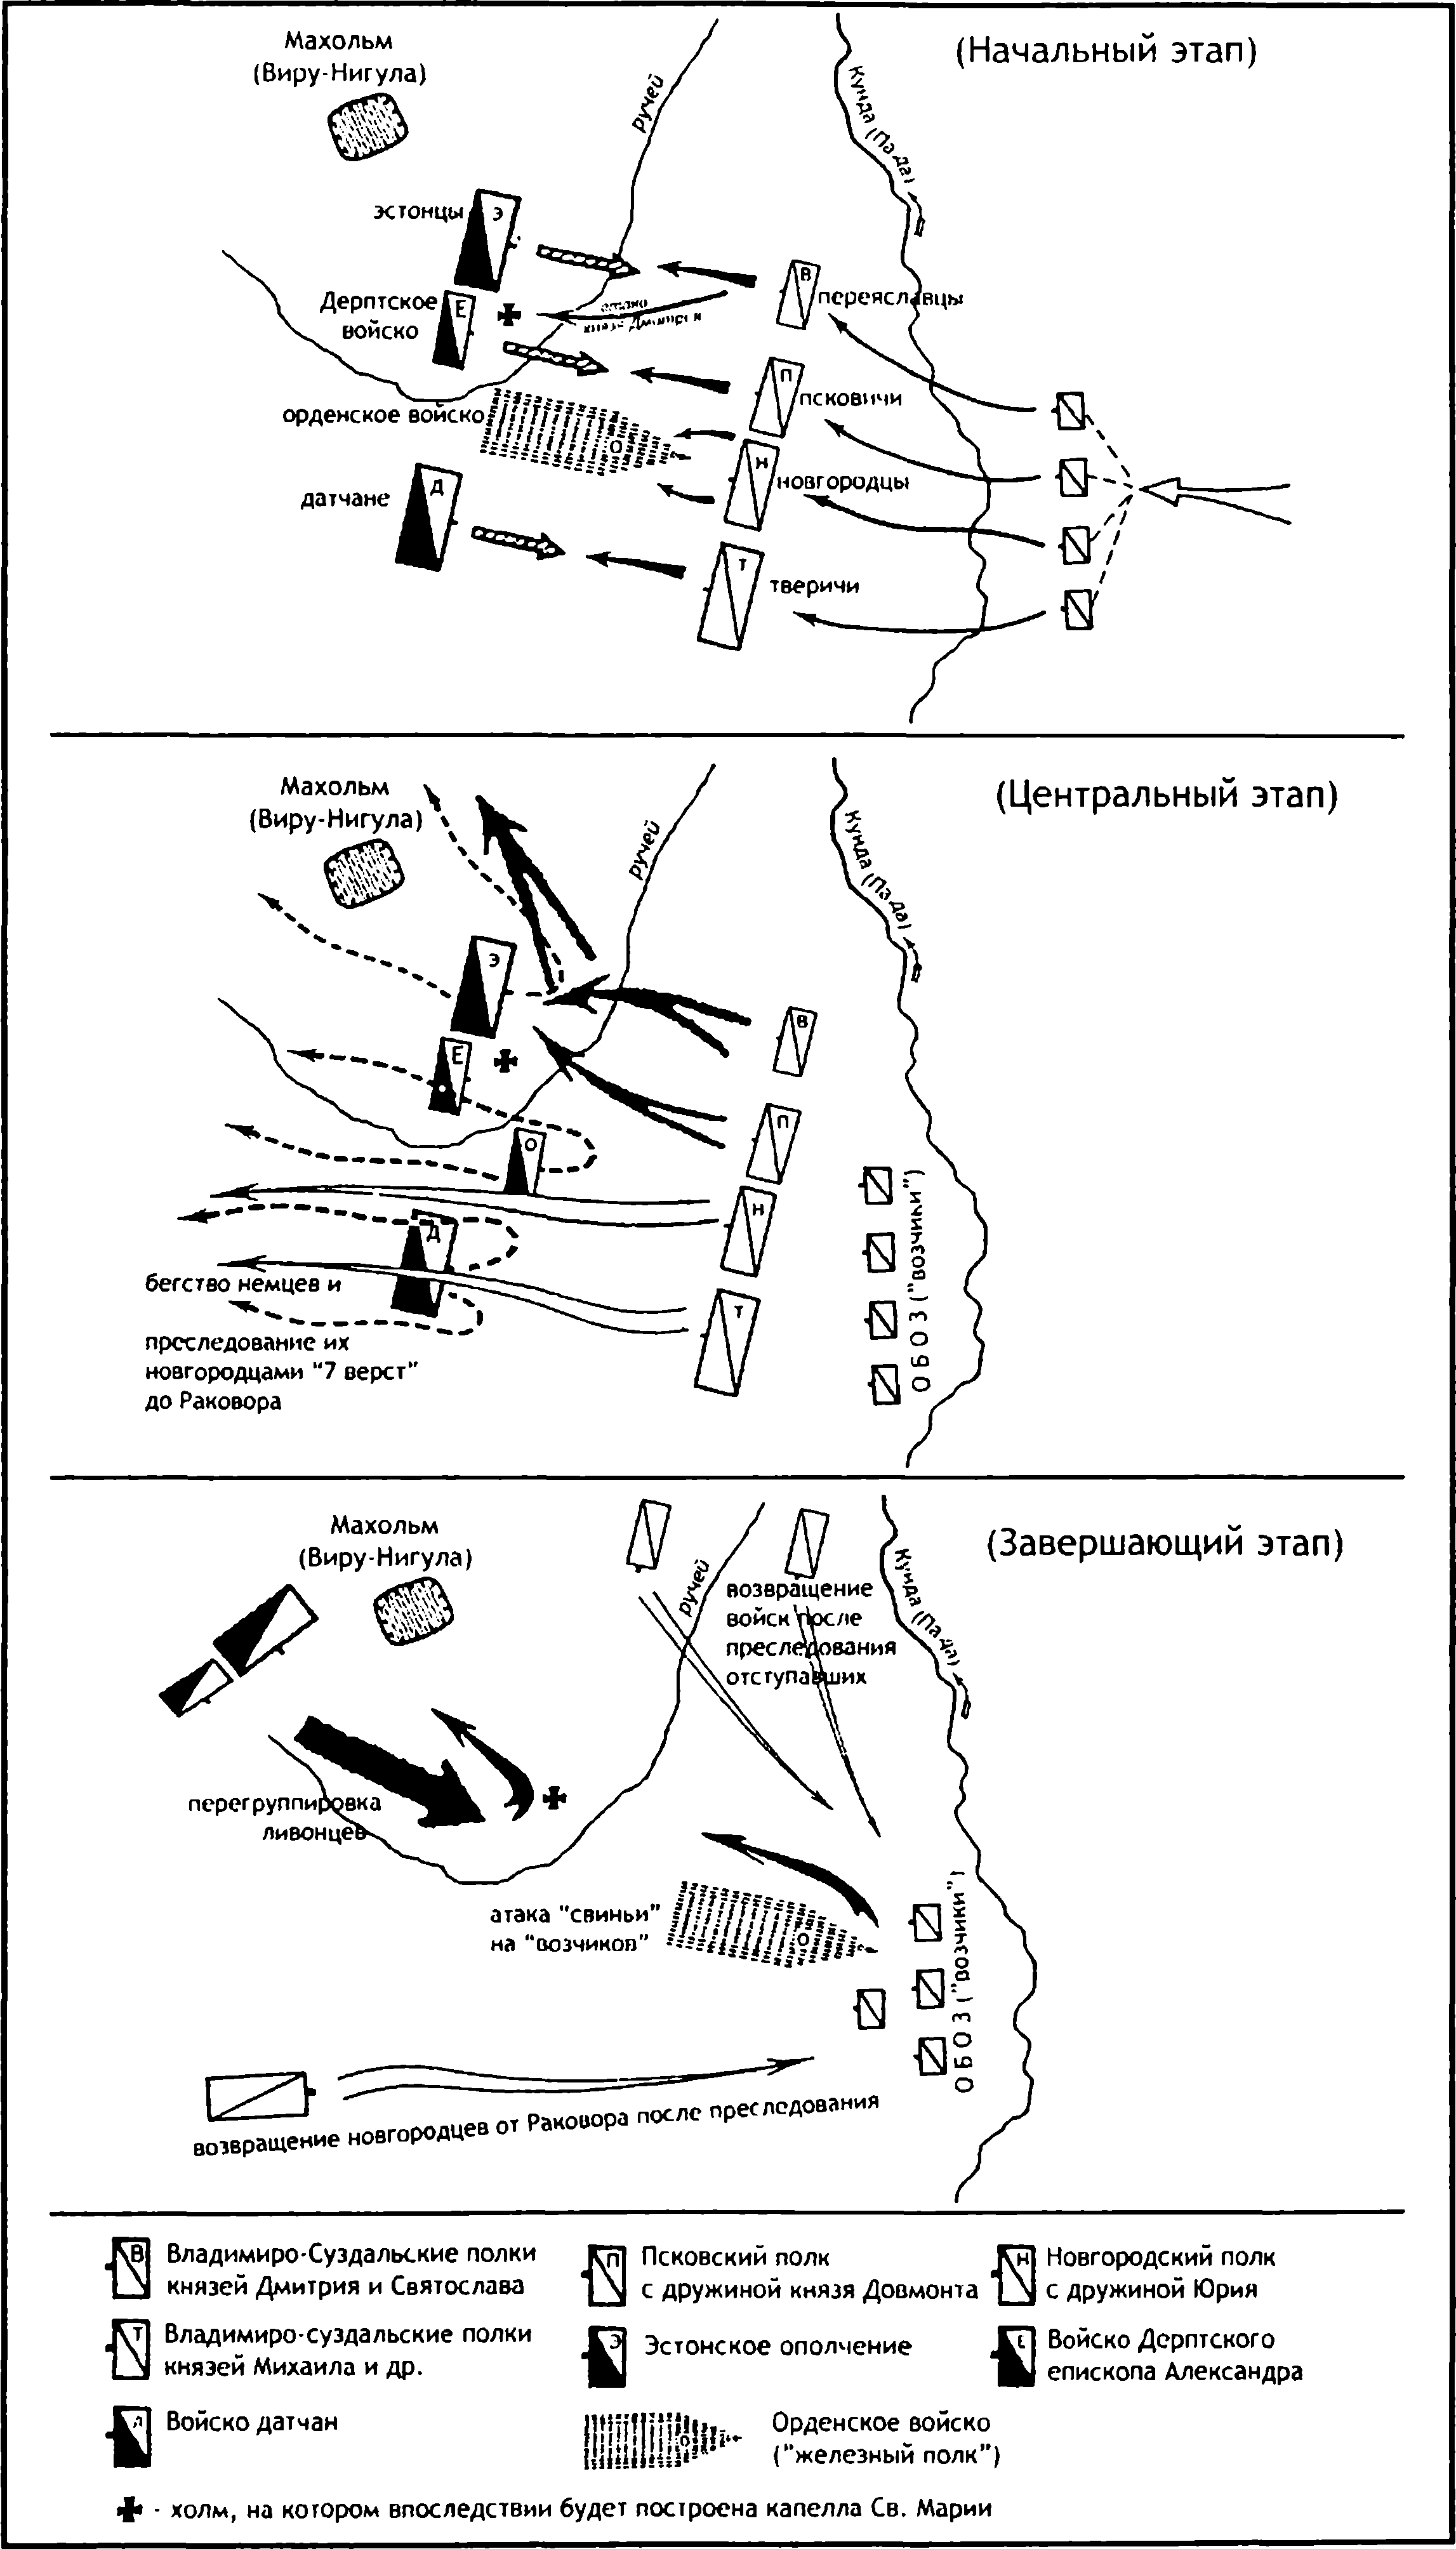 Раковорская битва, 18 февраля 1268 г.